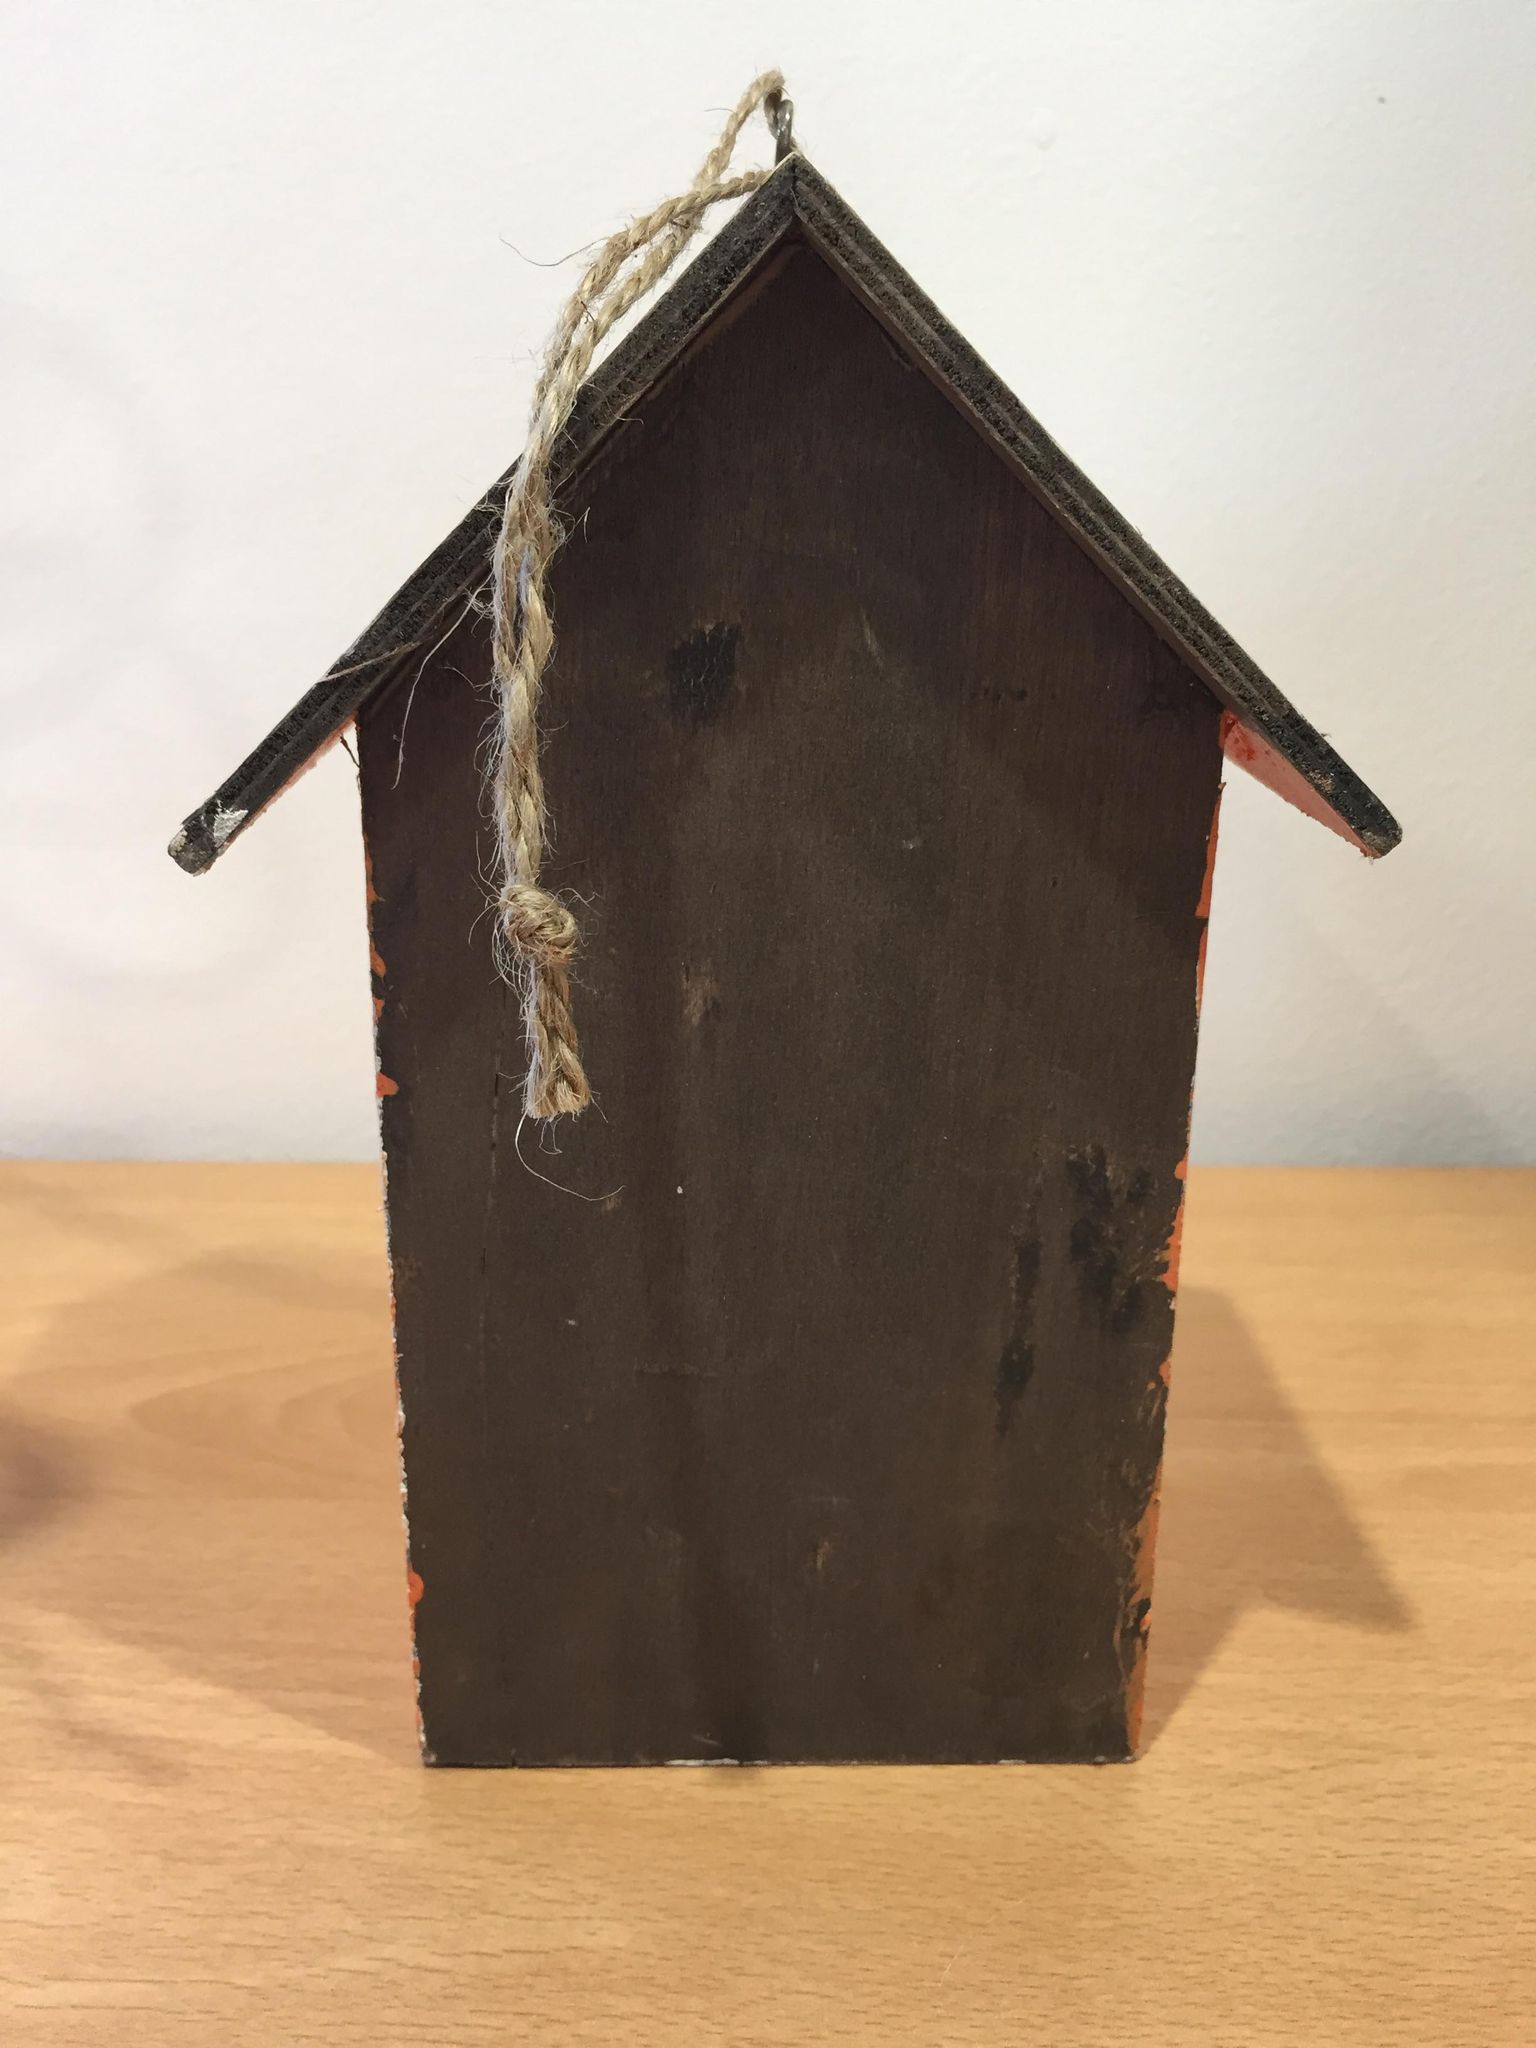 Mini Shed Bird House